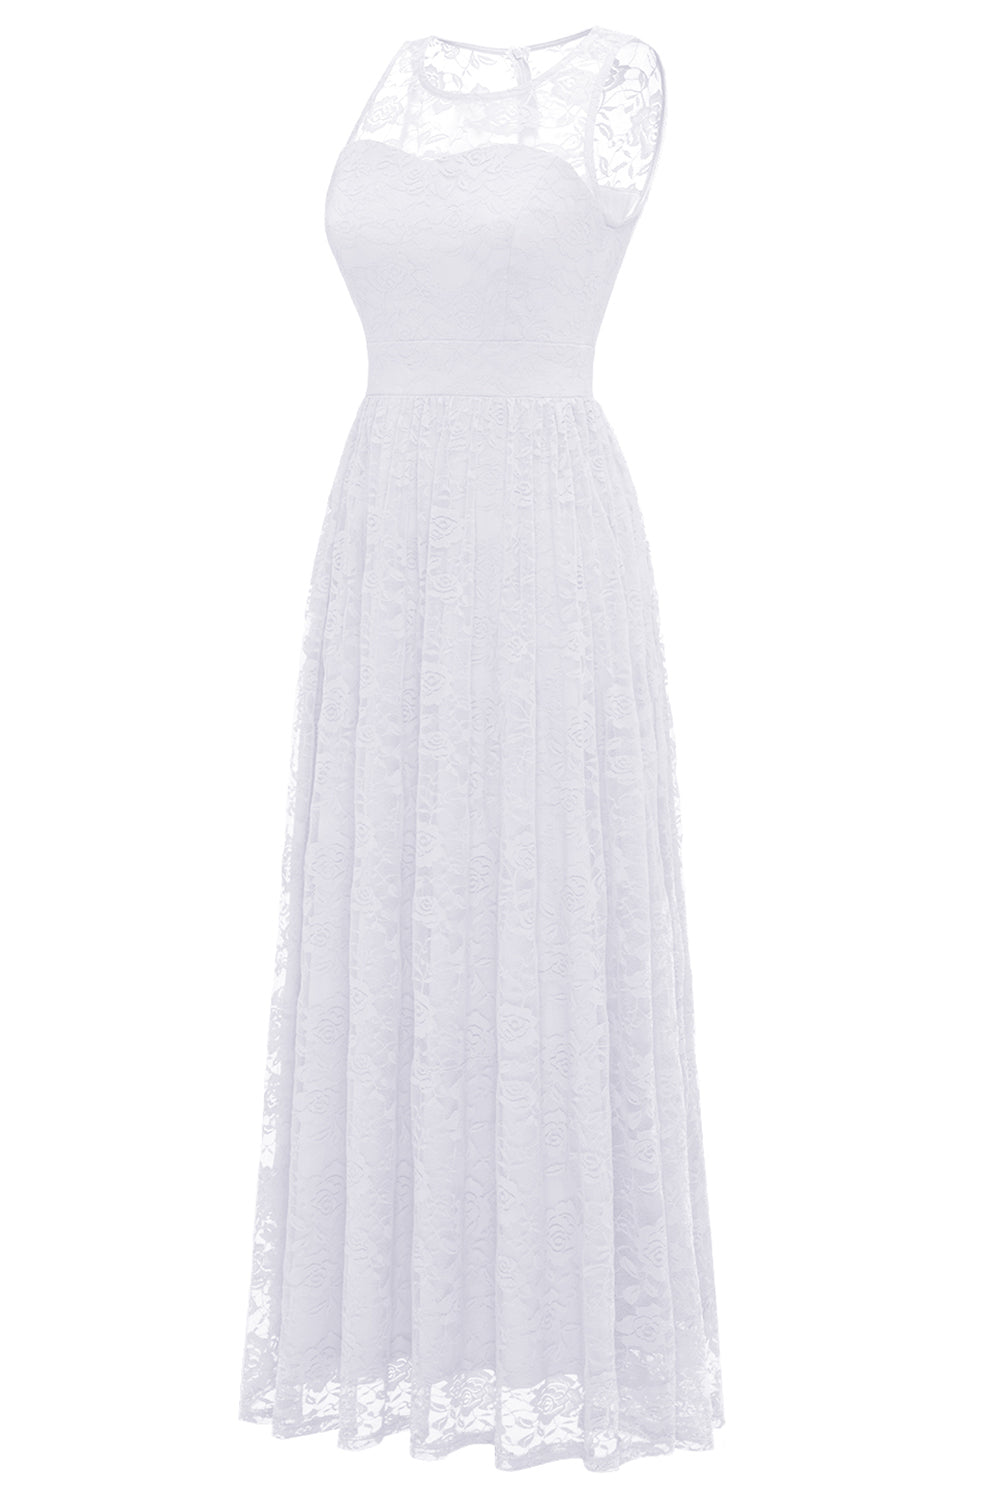 White Long Lace Formal Dress